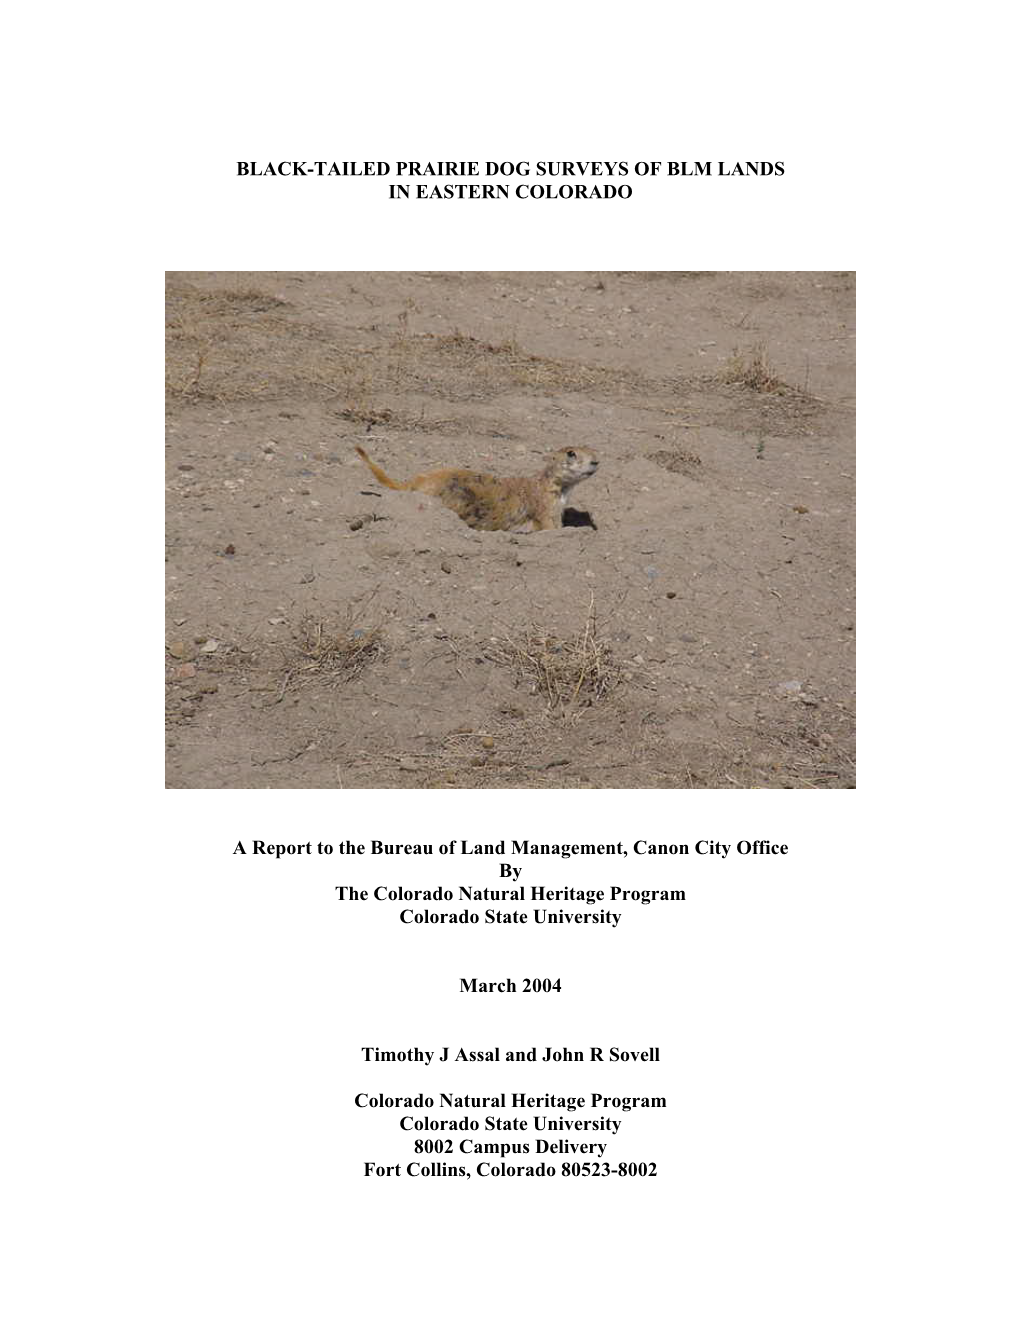 Black-Tailed Prairie Dog Surveys of Blm Lands in Eastern Colorado